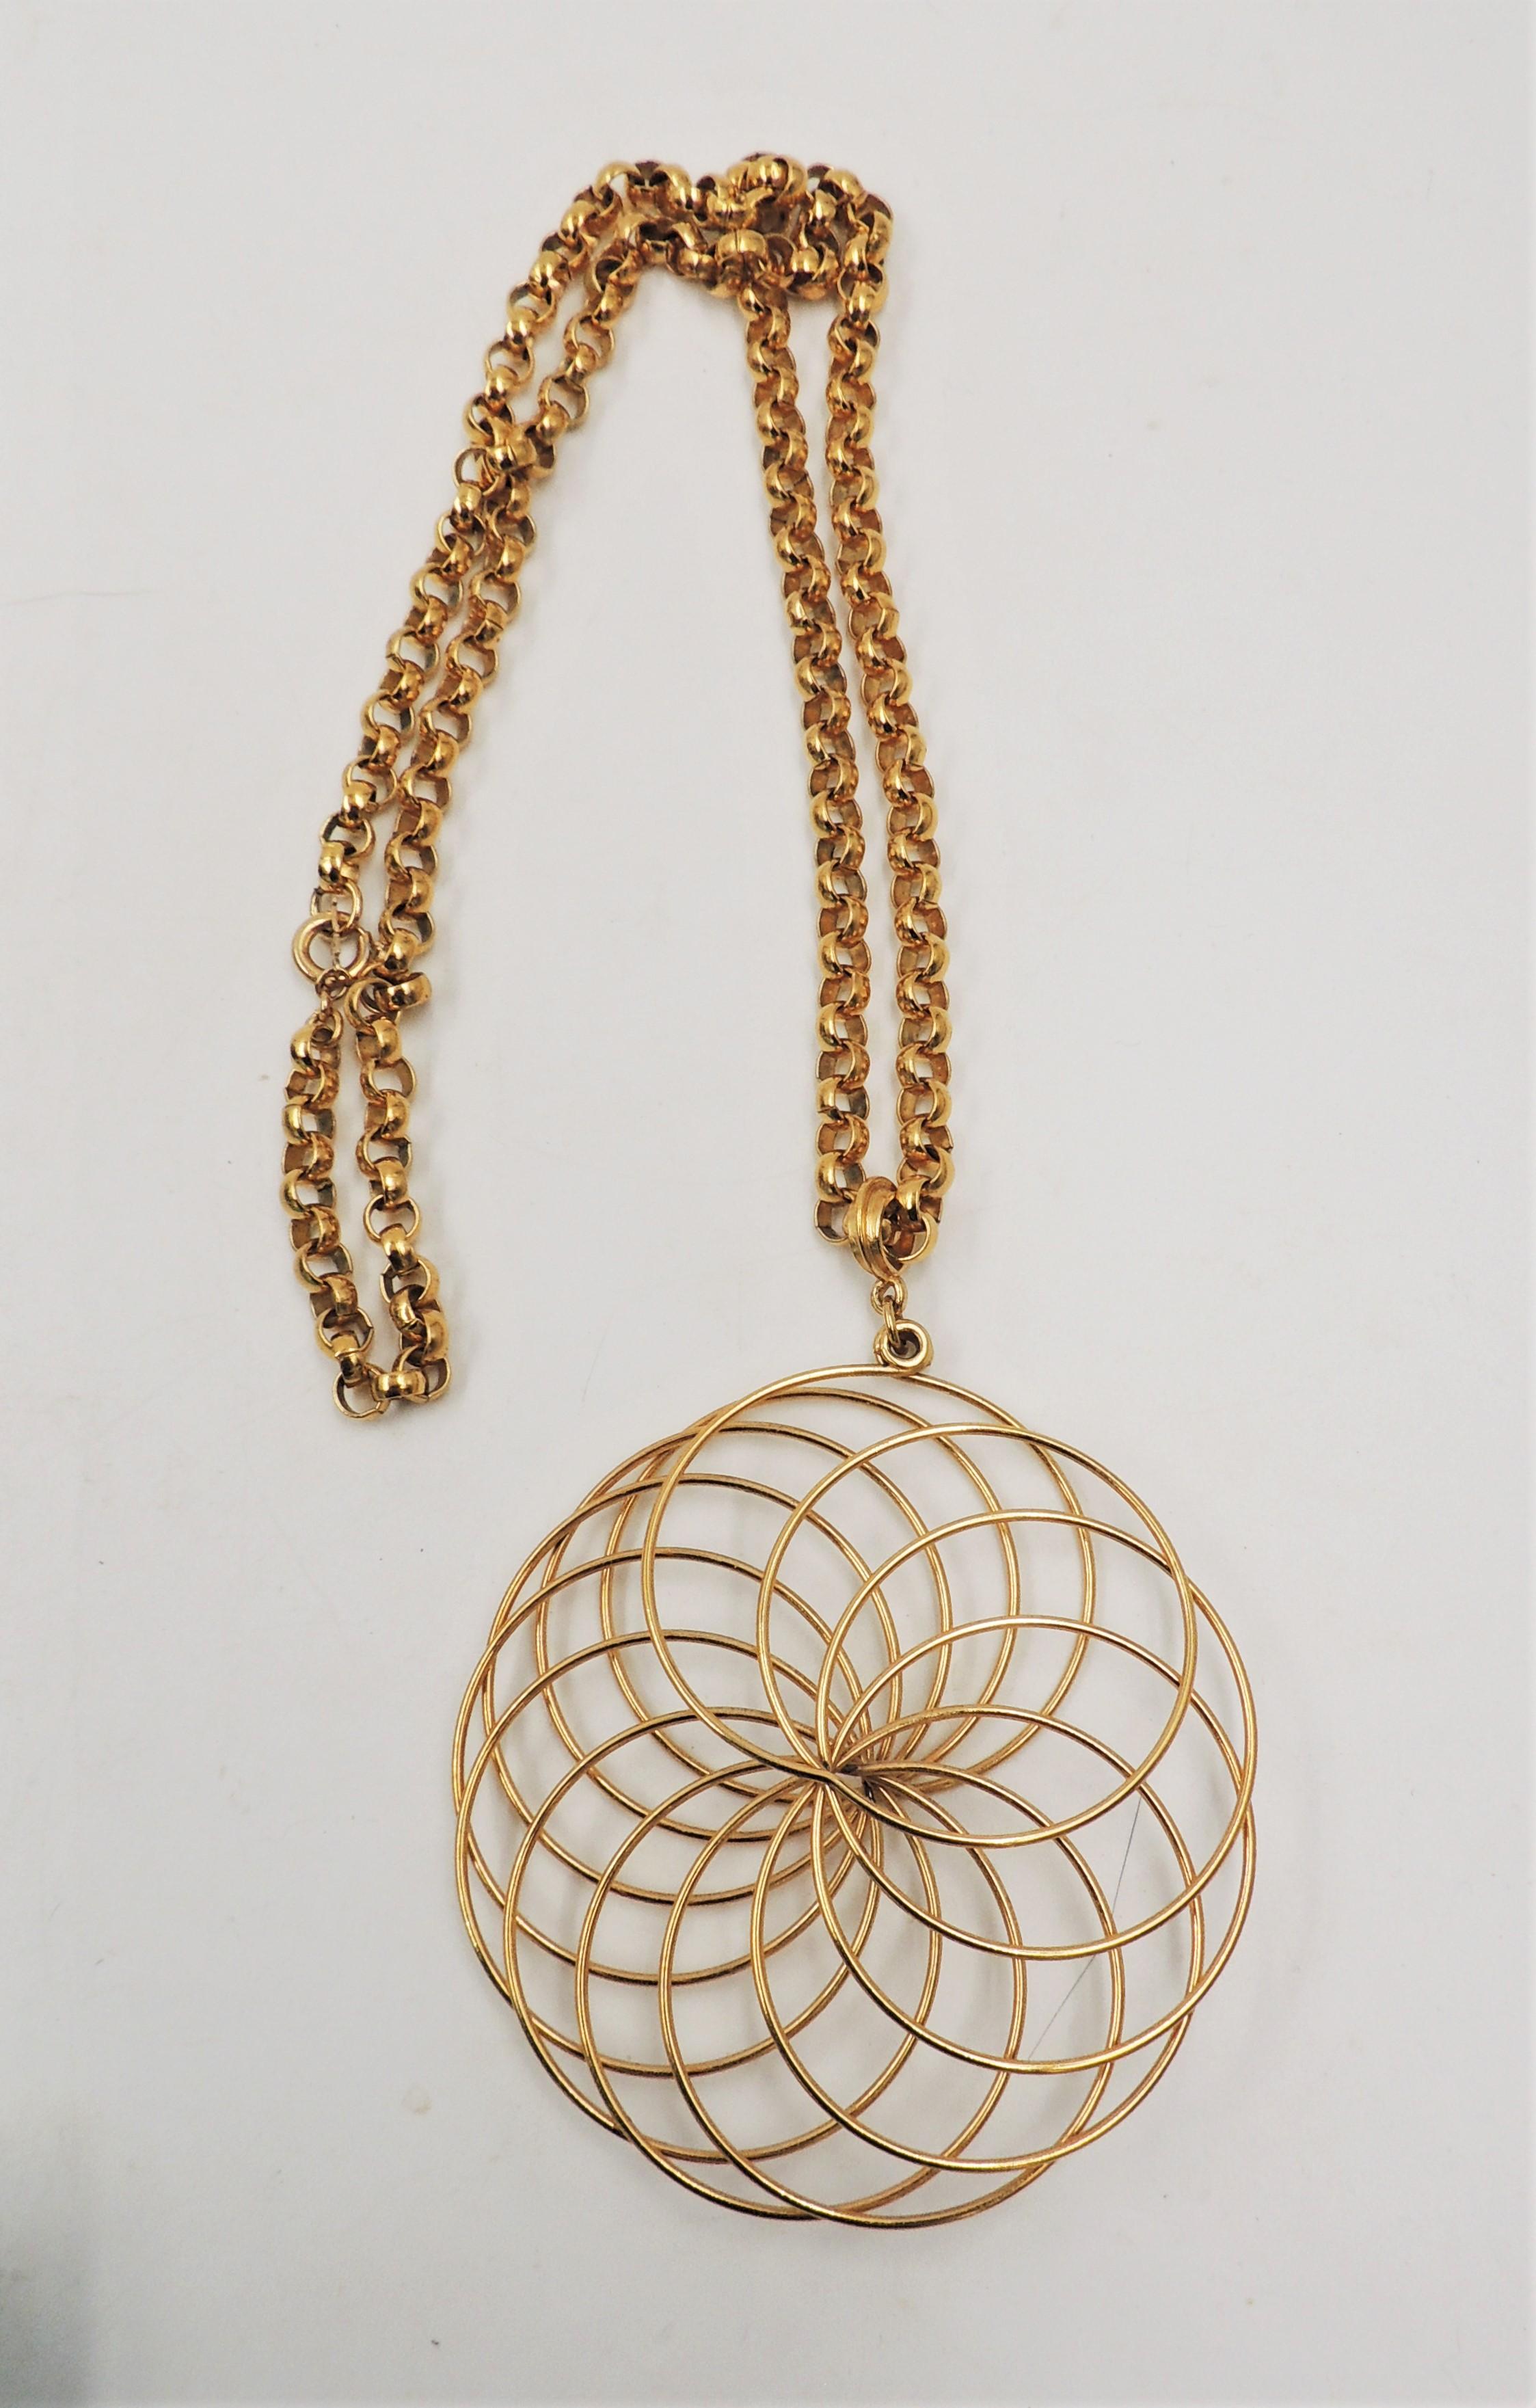 Vintage Signed Crown Trifari Goldtone Spiral Pendant Necklace, 1974 Ad Piece For Sale 2